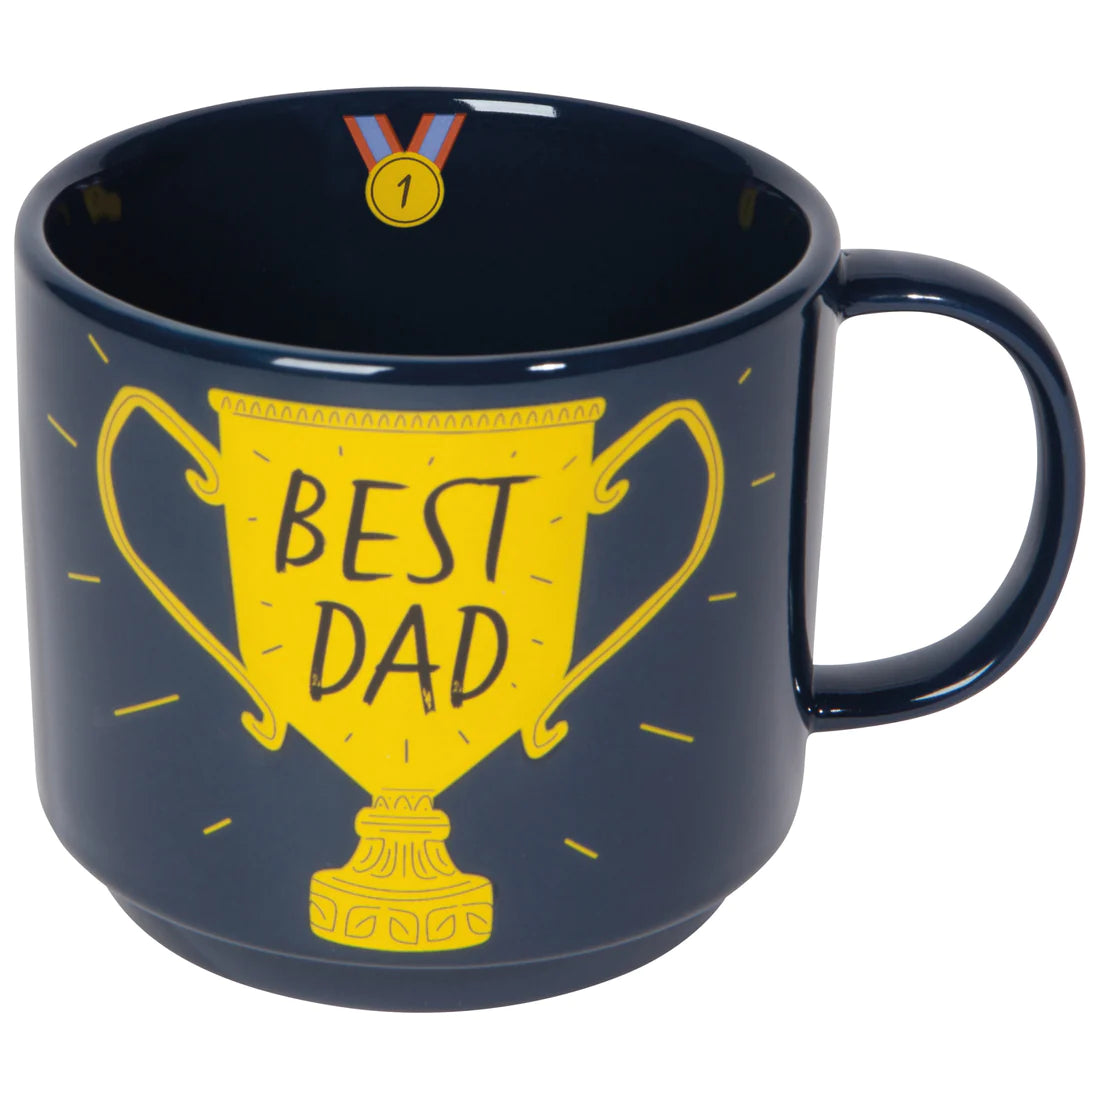 Mug and Socks Set - Best Dad